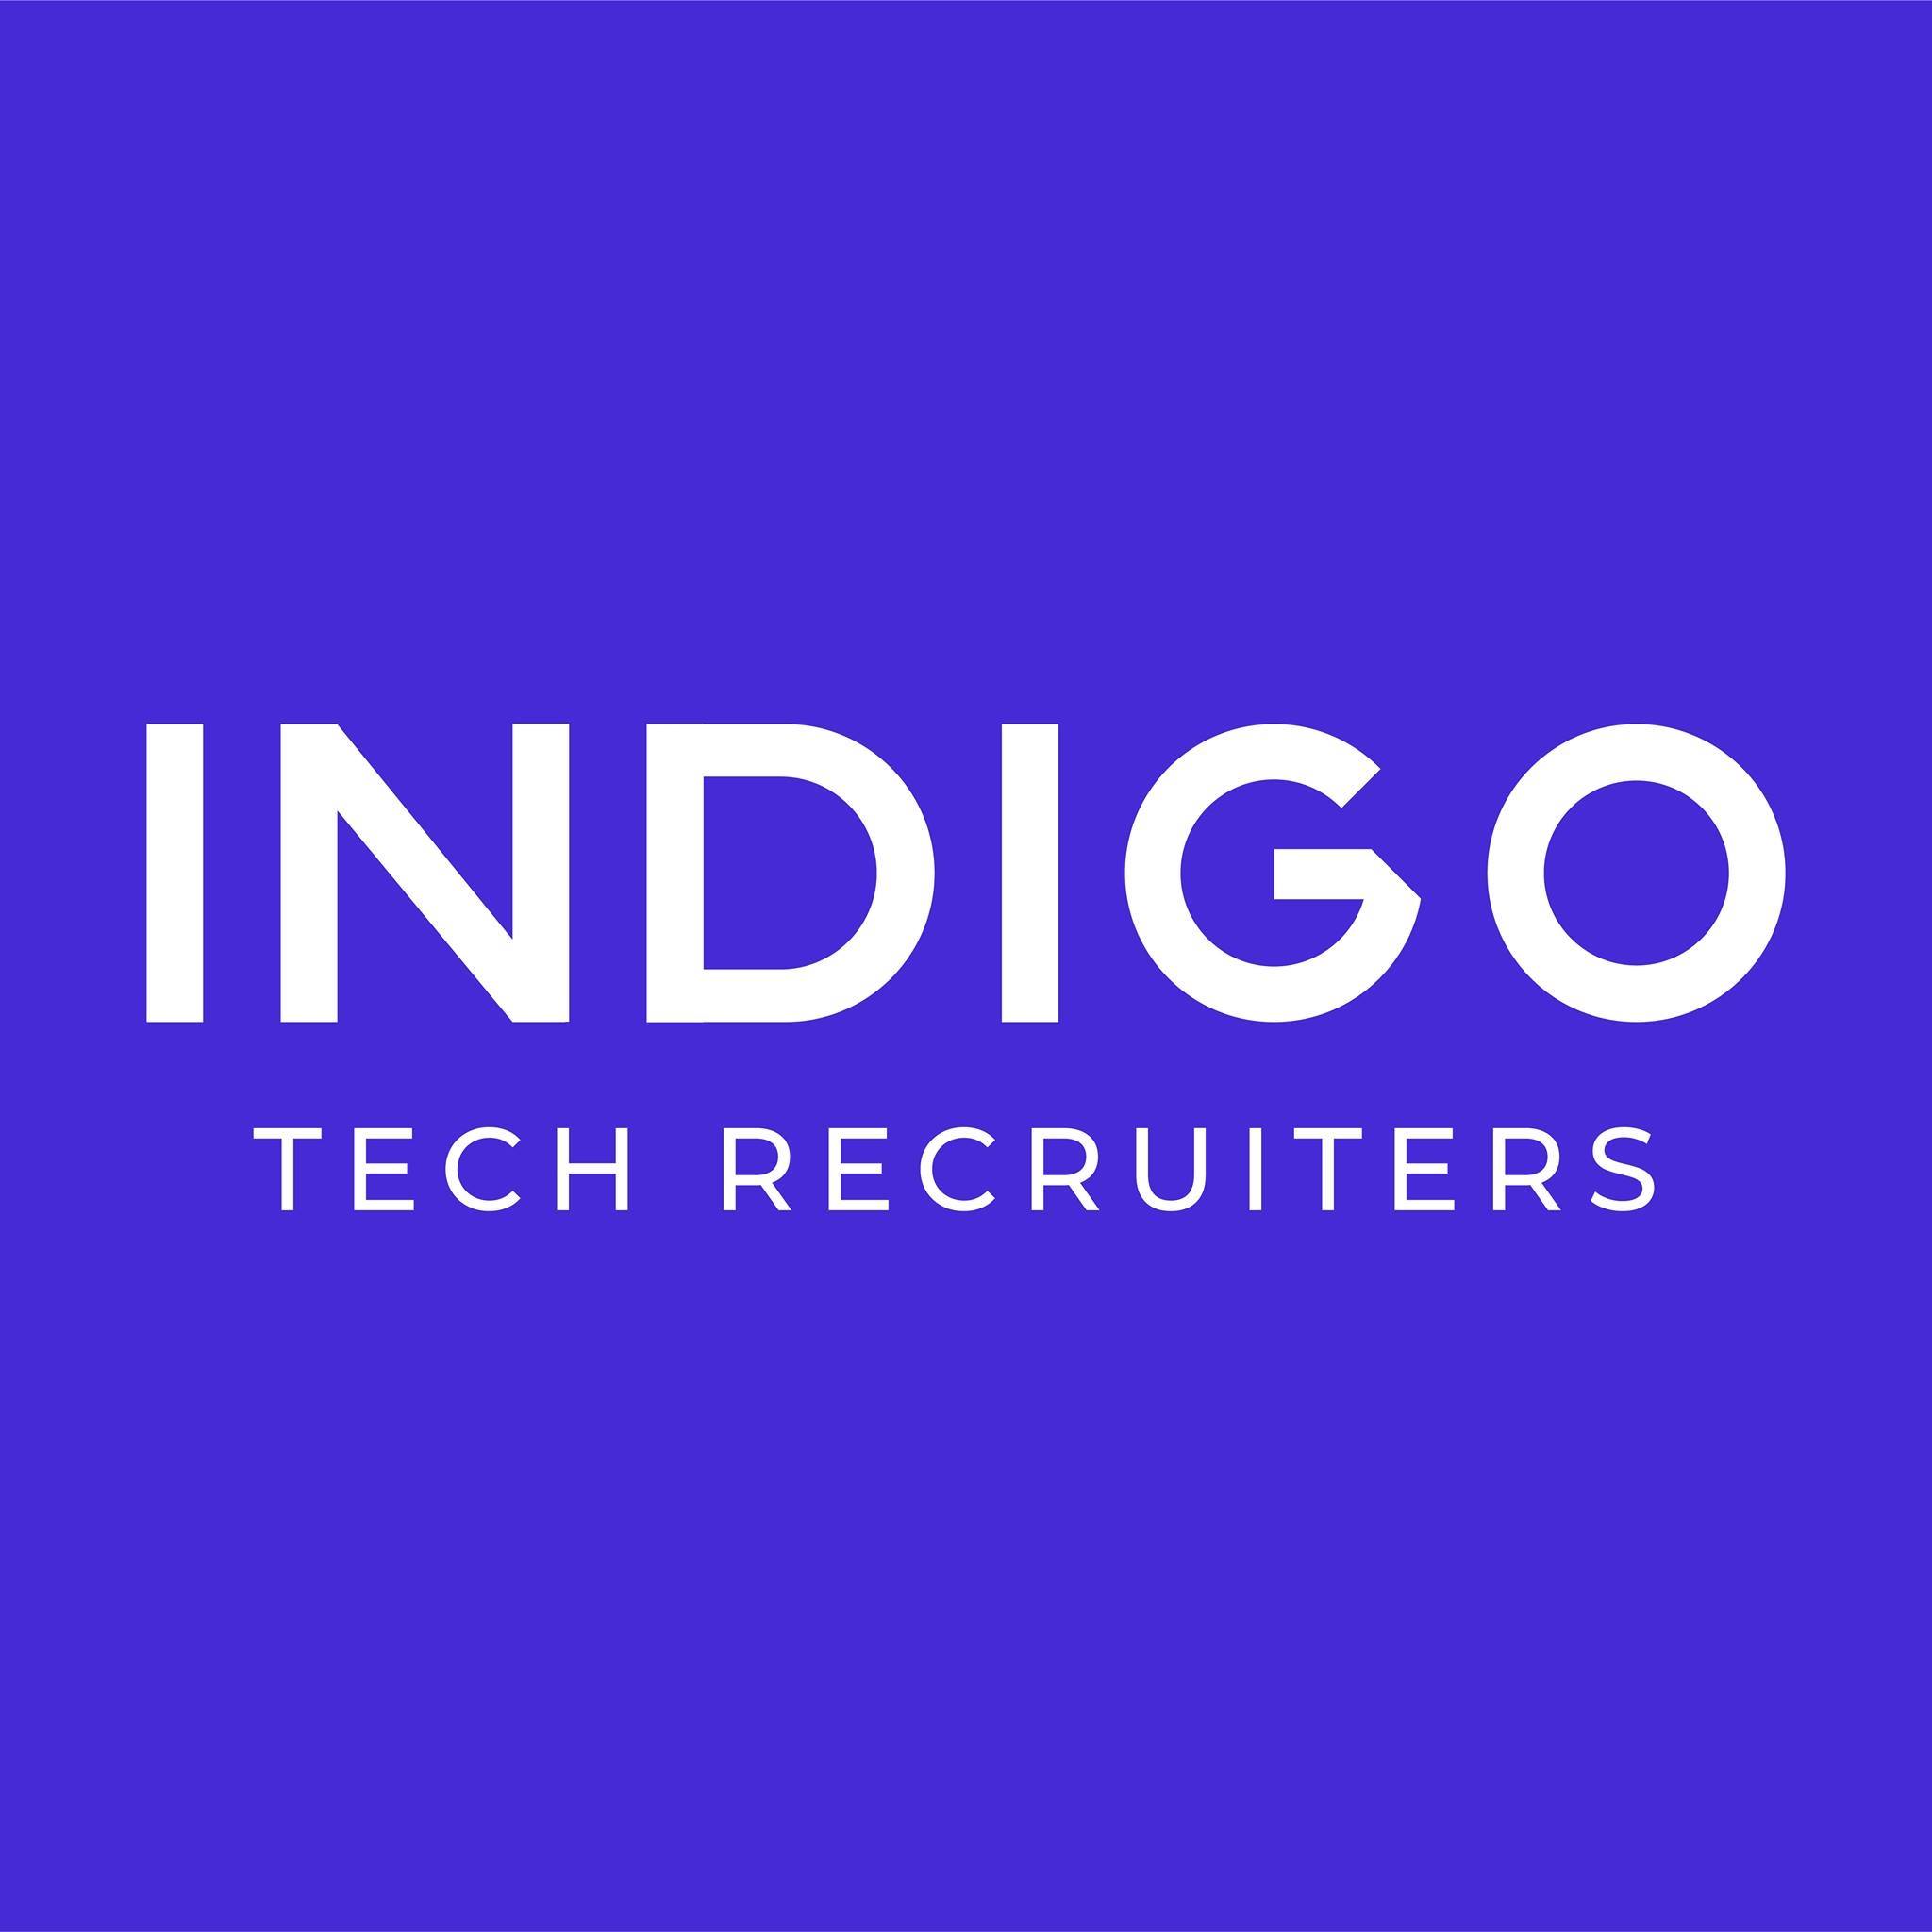 Indigo Tech Recruiters